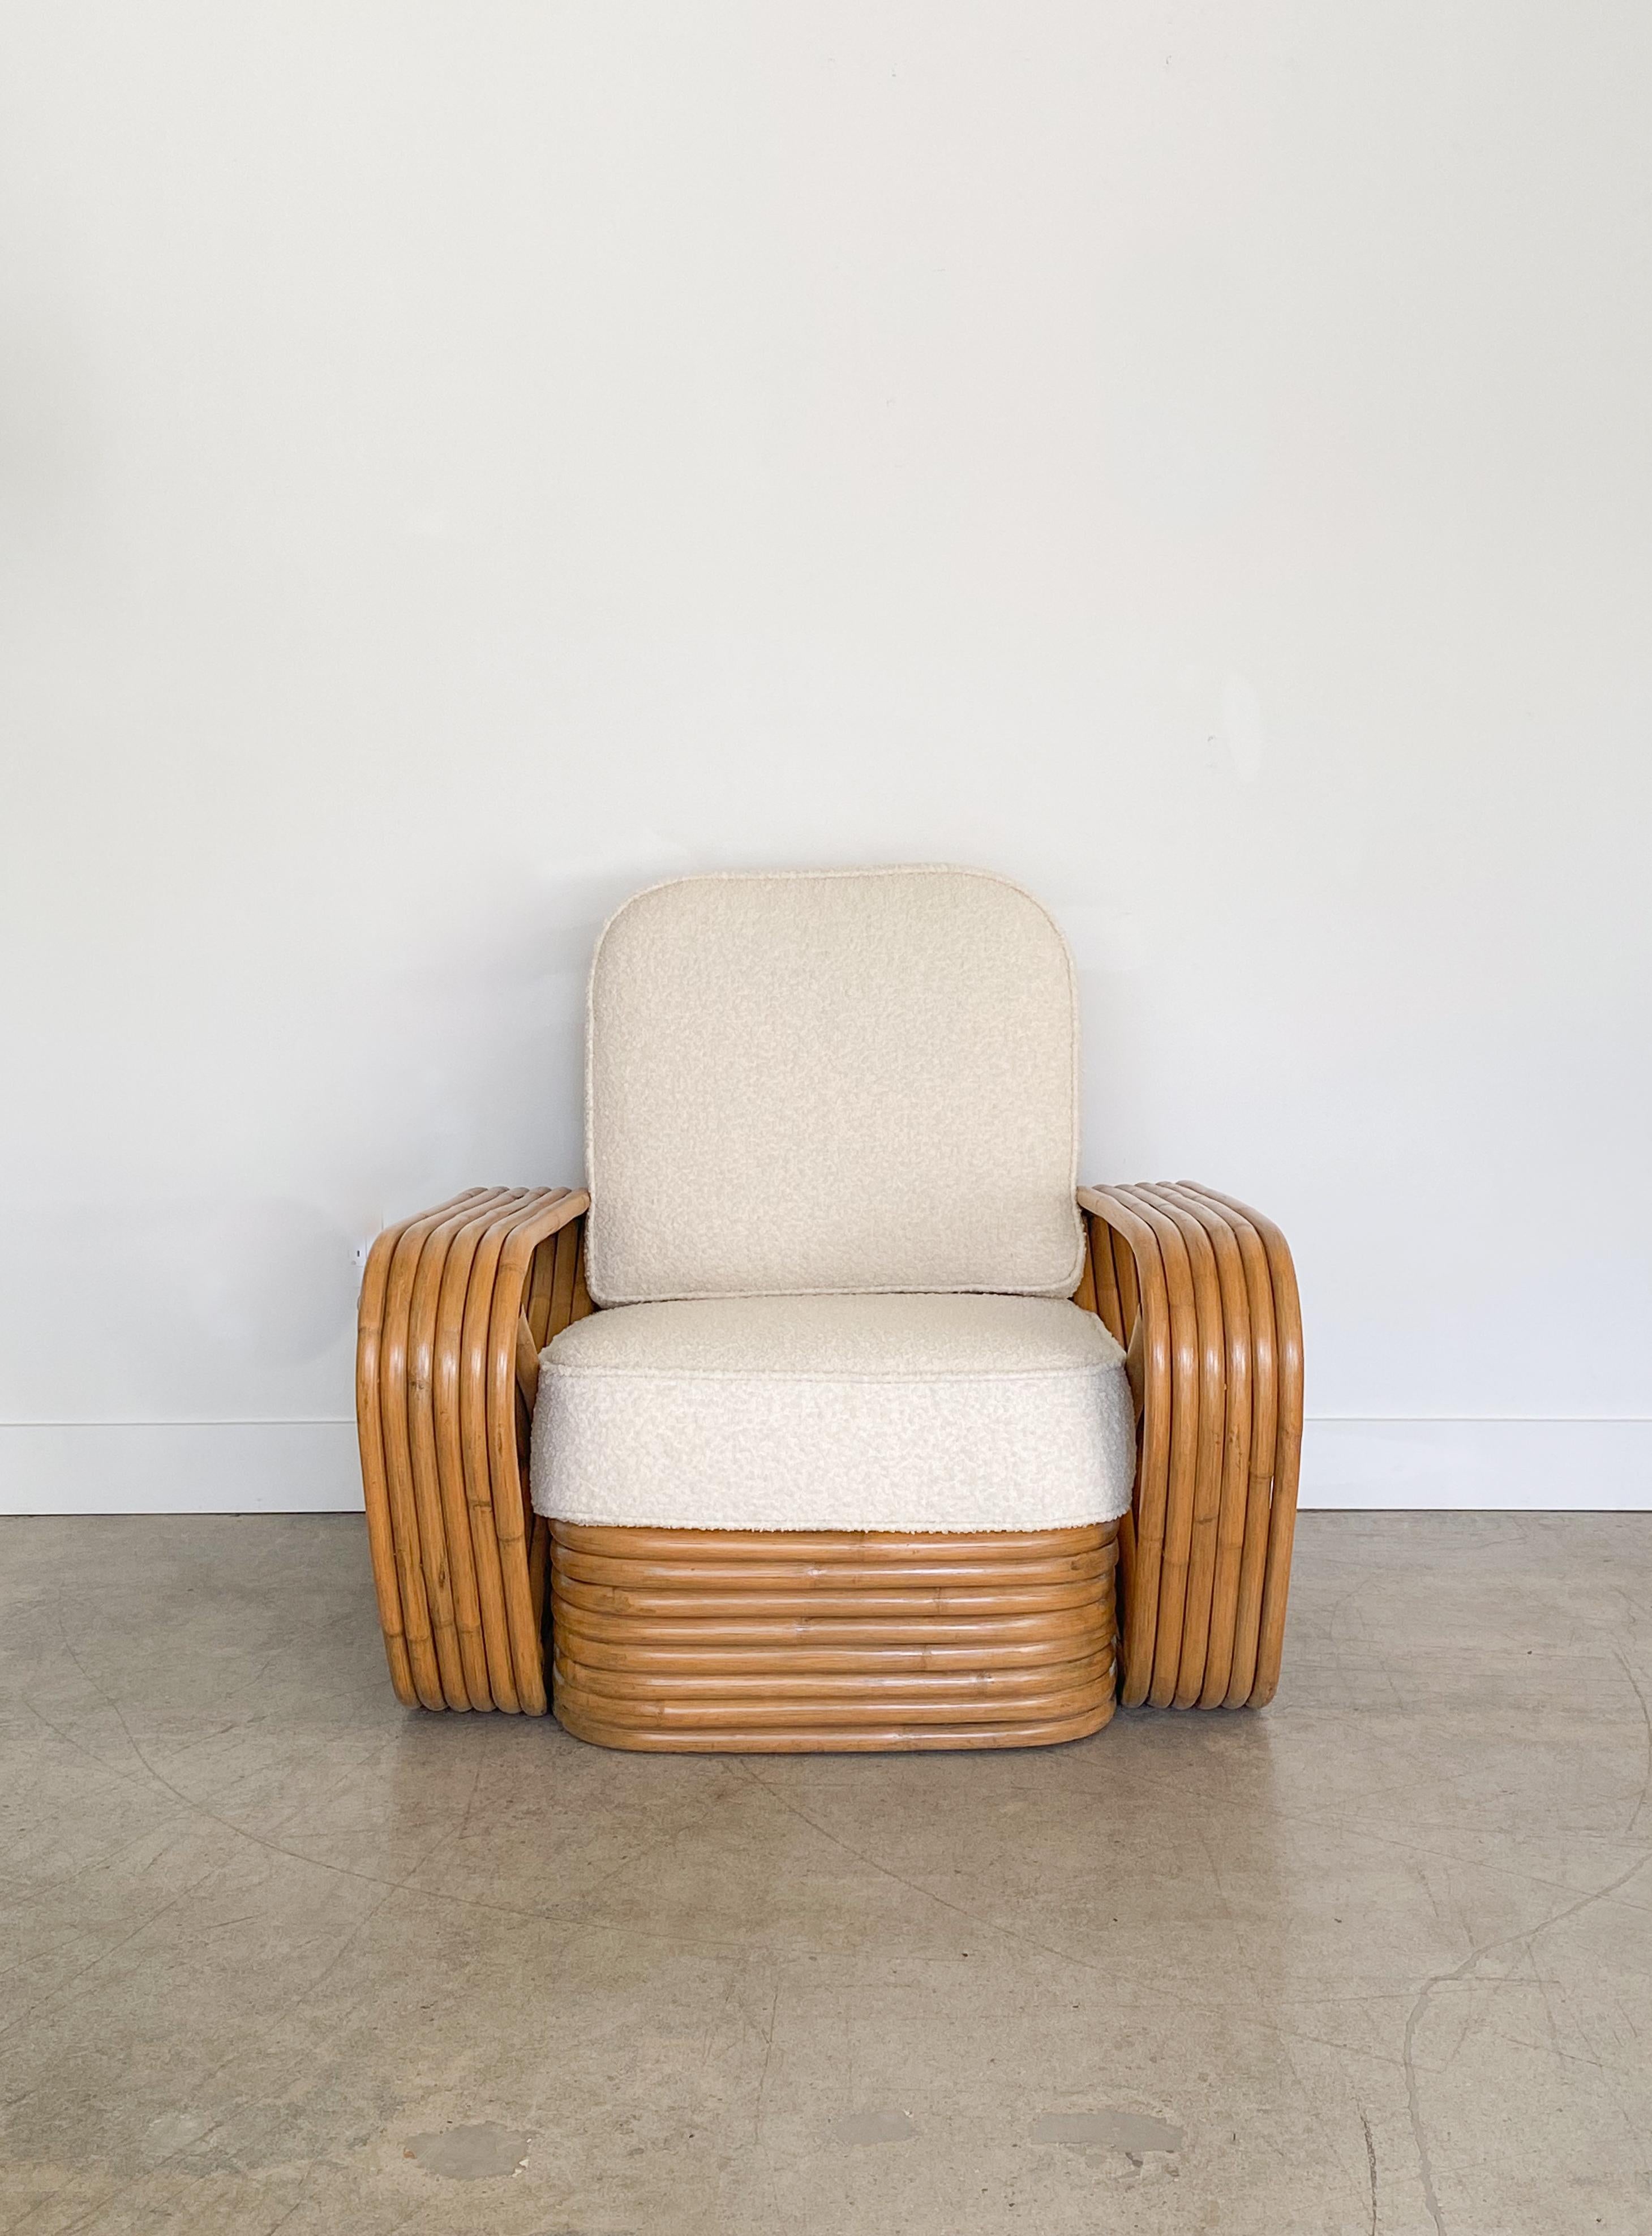 paul frank chair